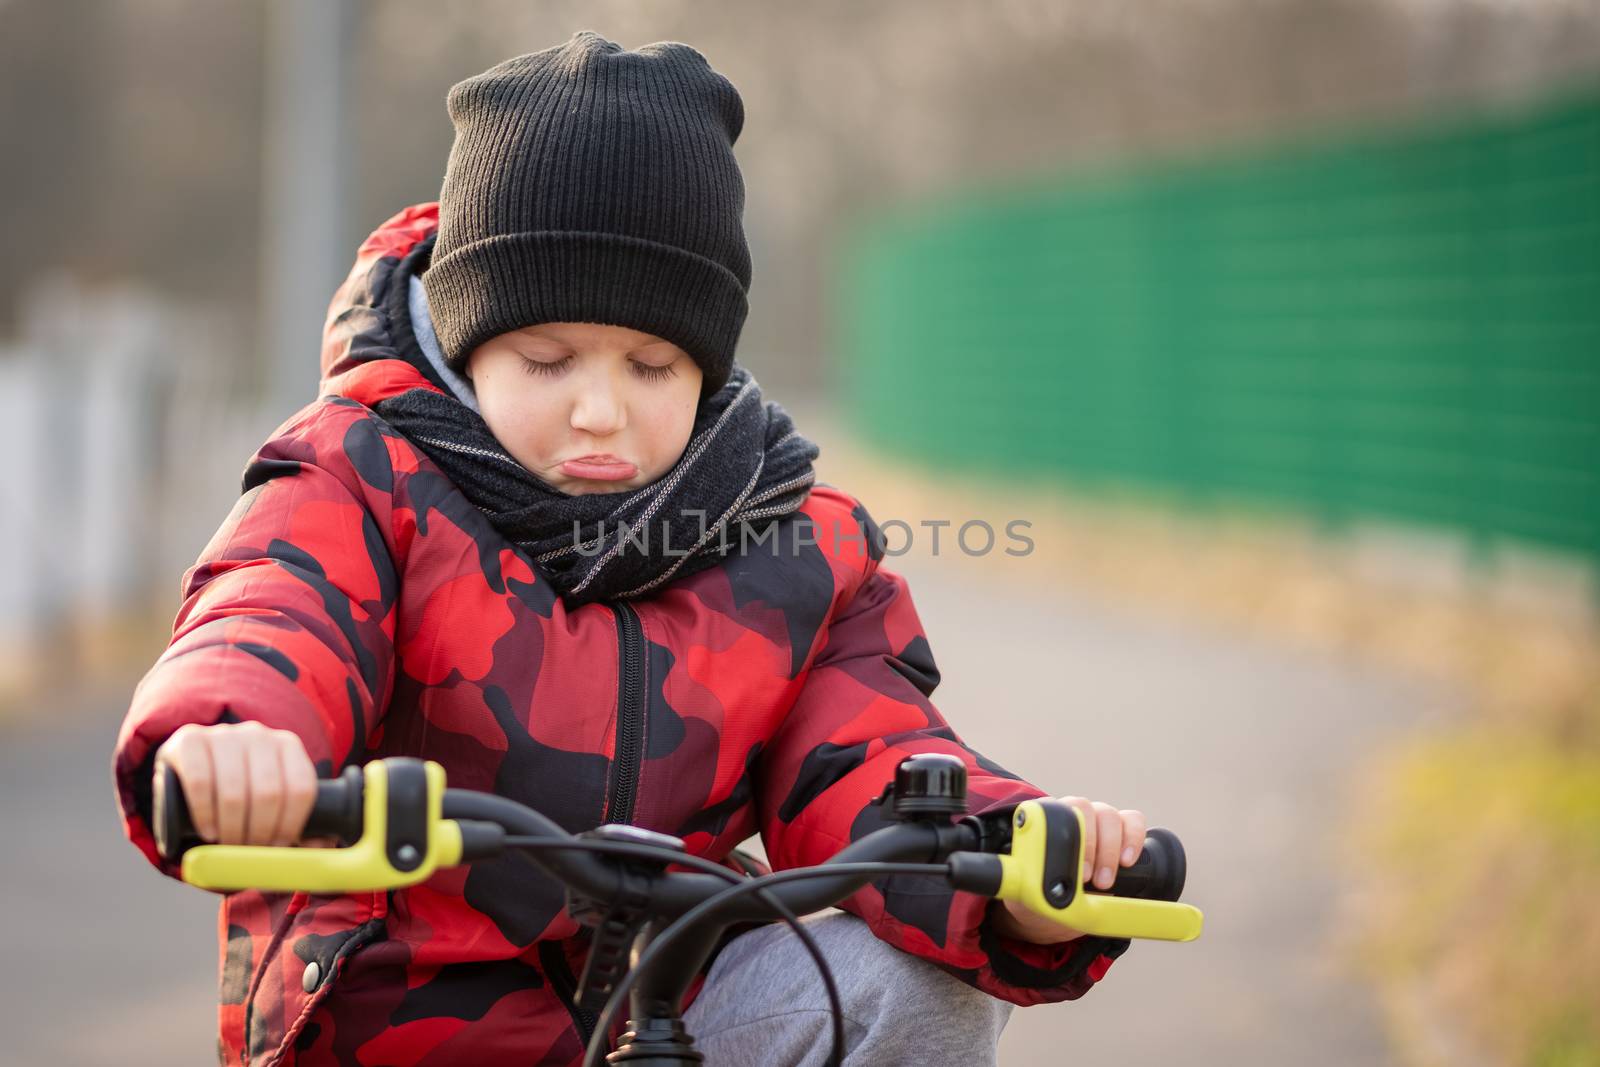 Sad child sitting on bicycle at park close up by Robertobinetti70